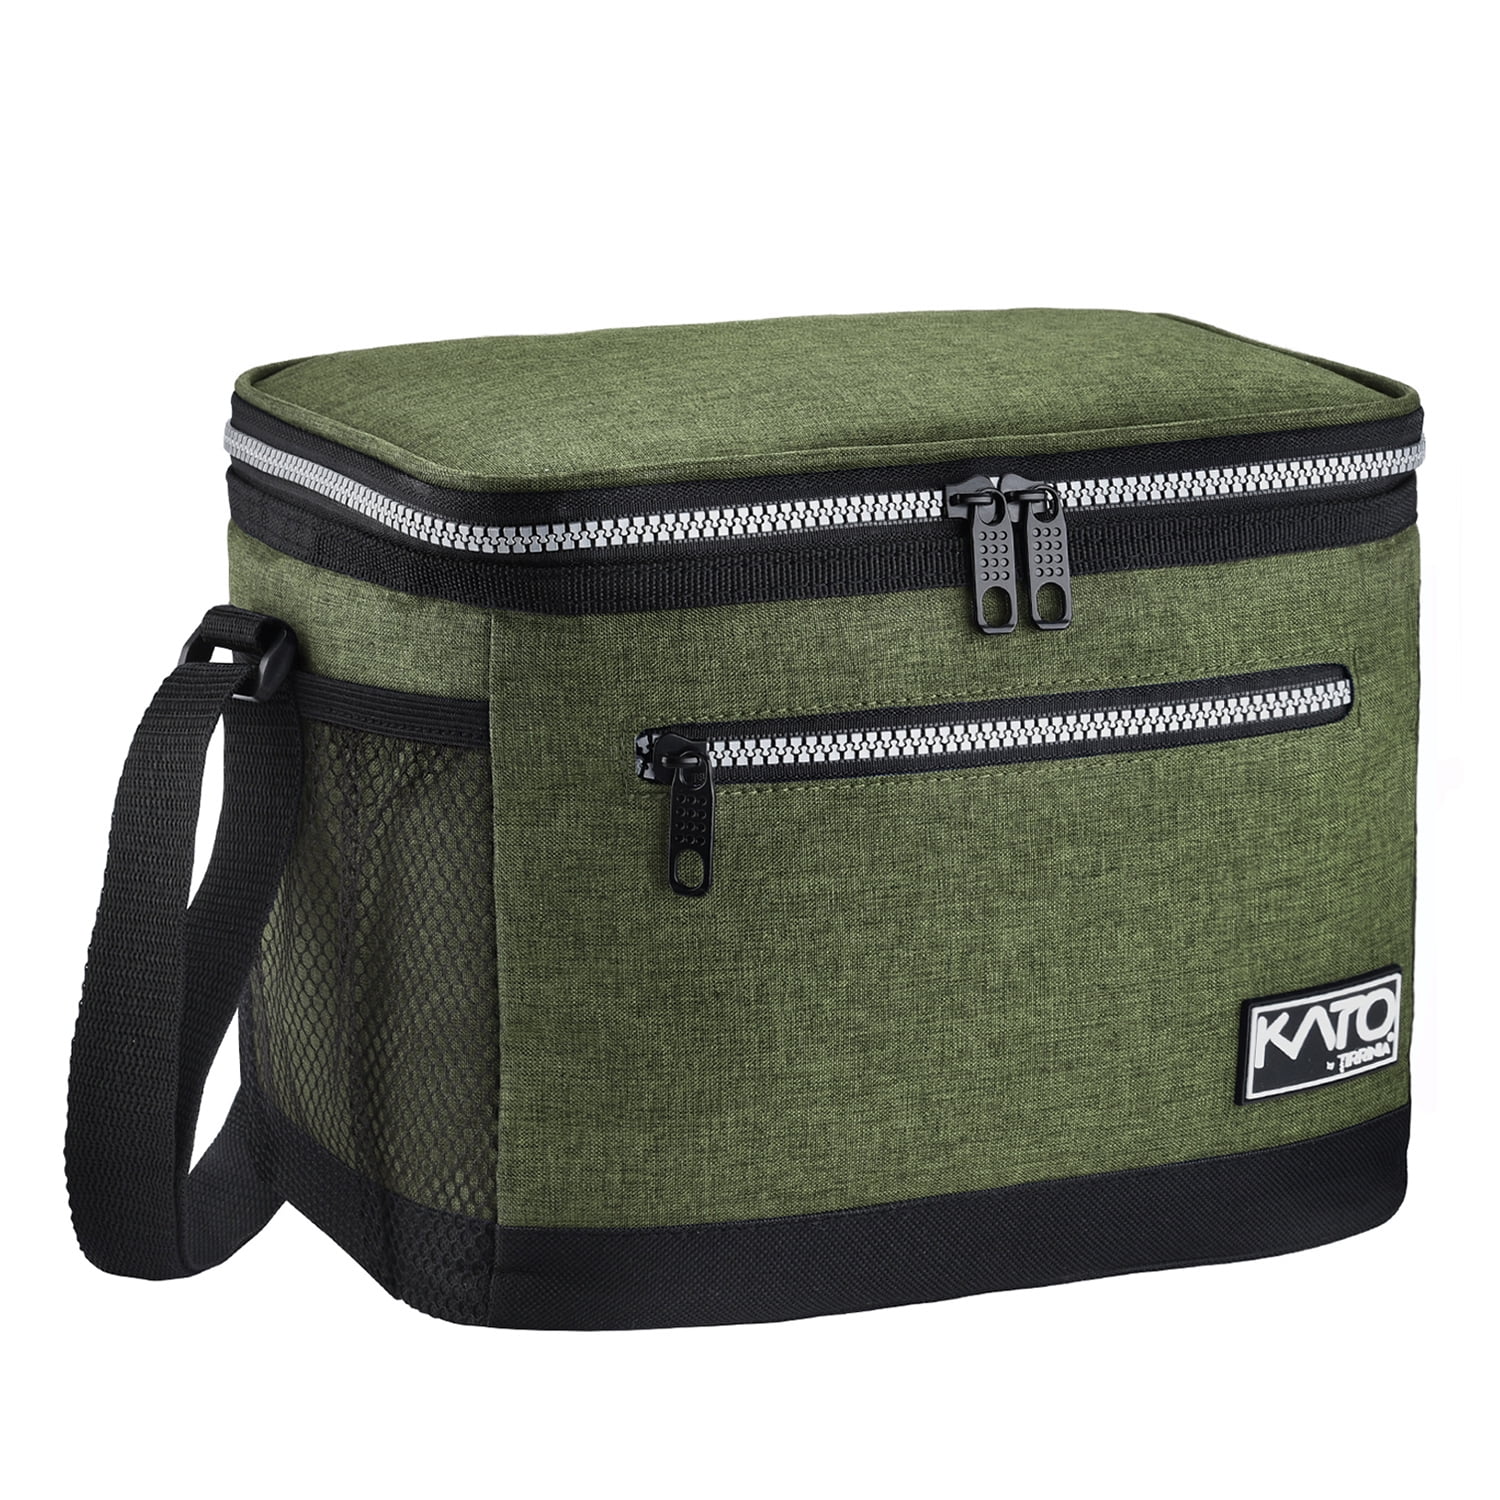 Fridge To-Go Medium Size Insulated Lunch Bag – My Green Stuff